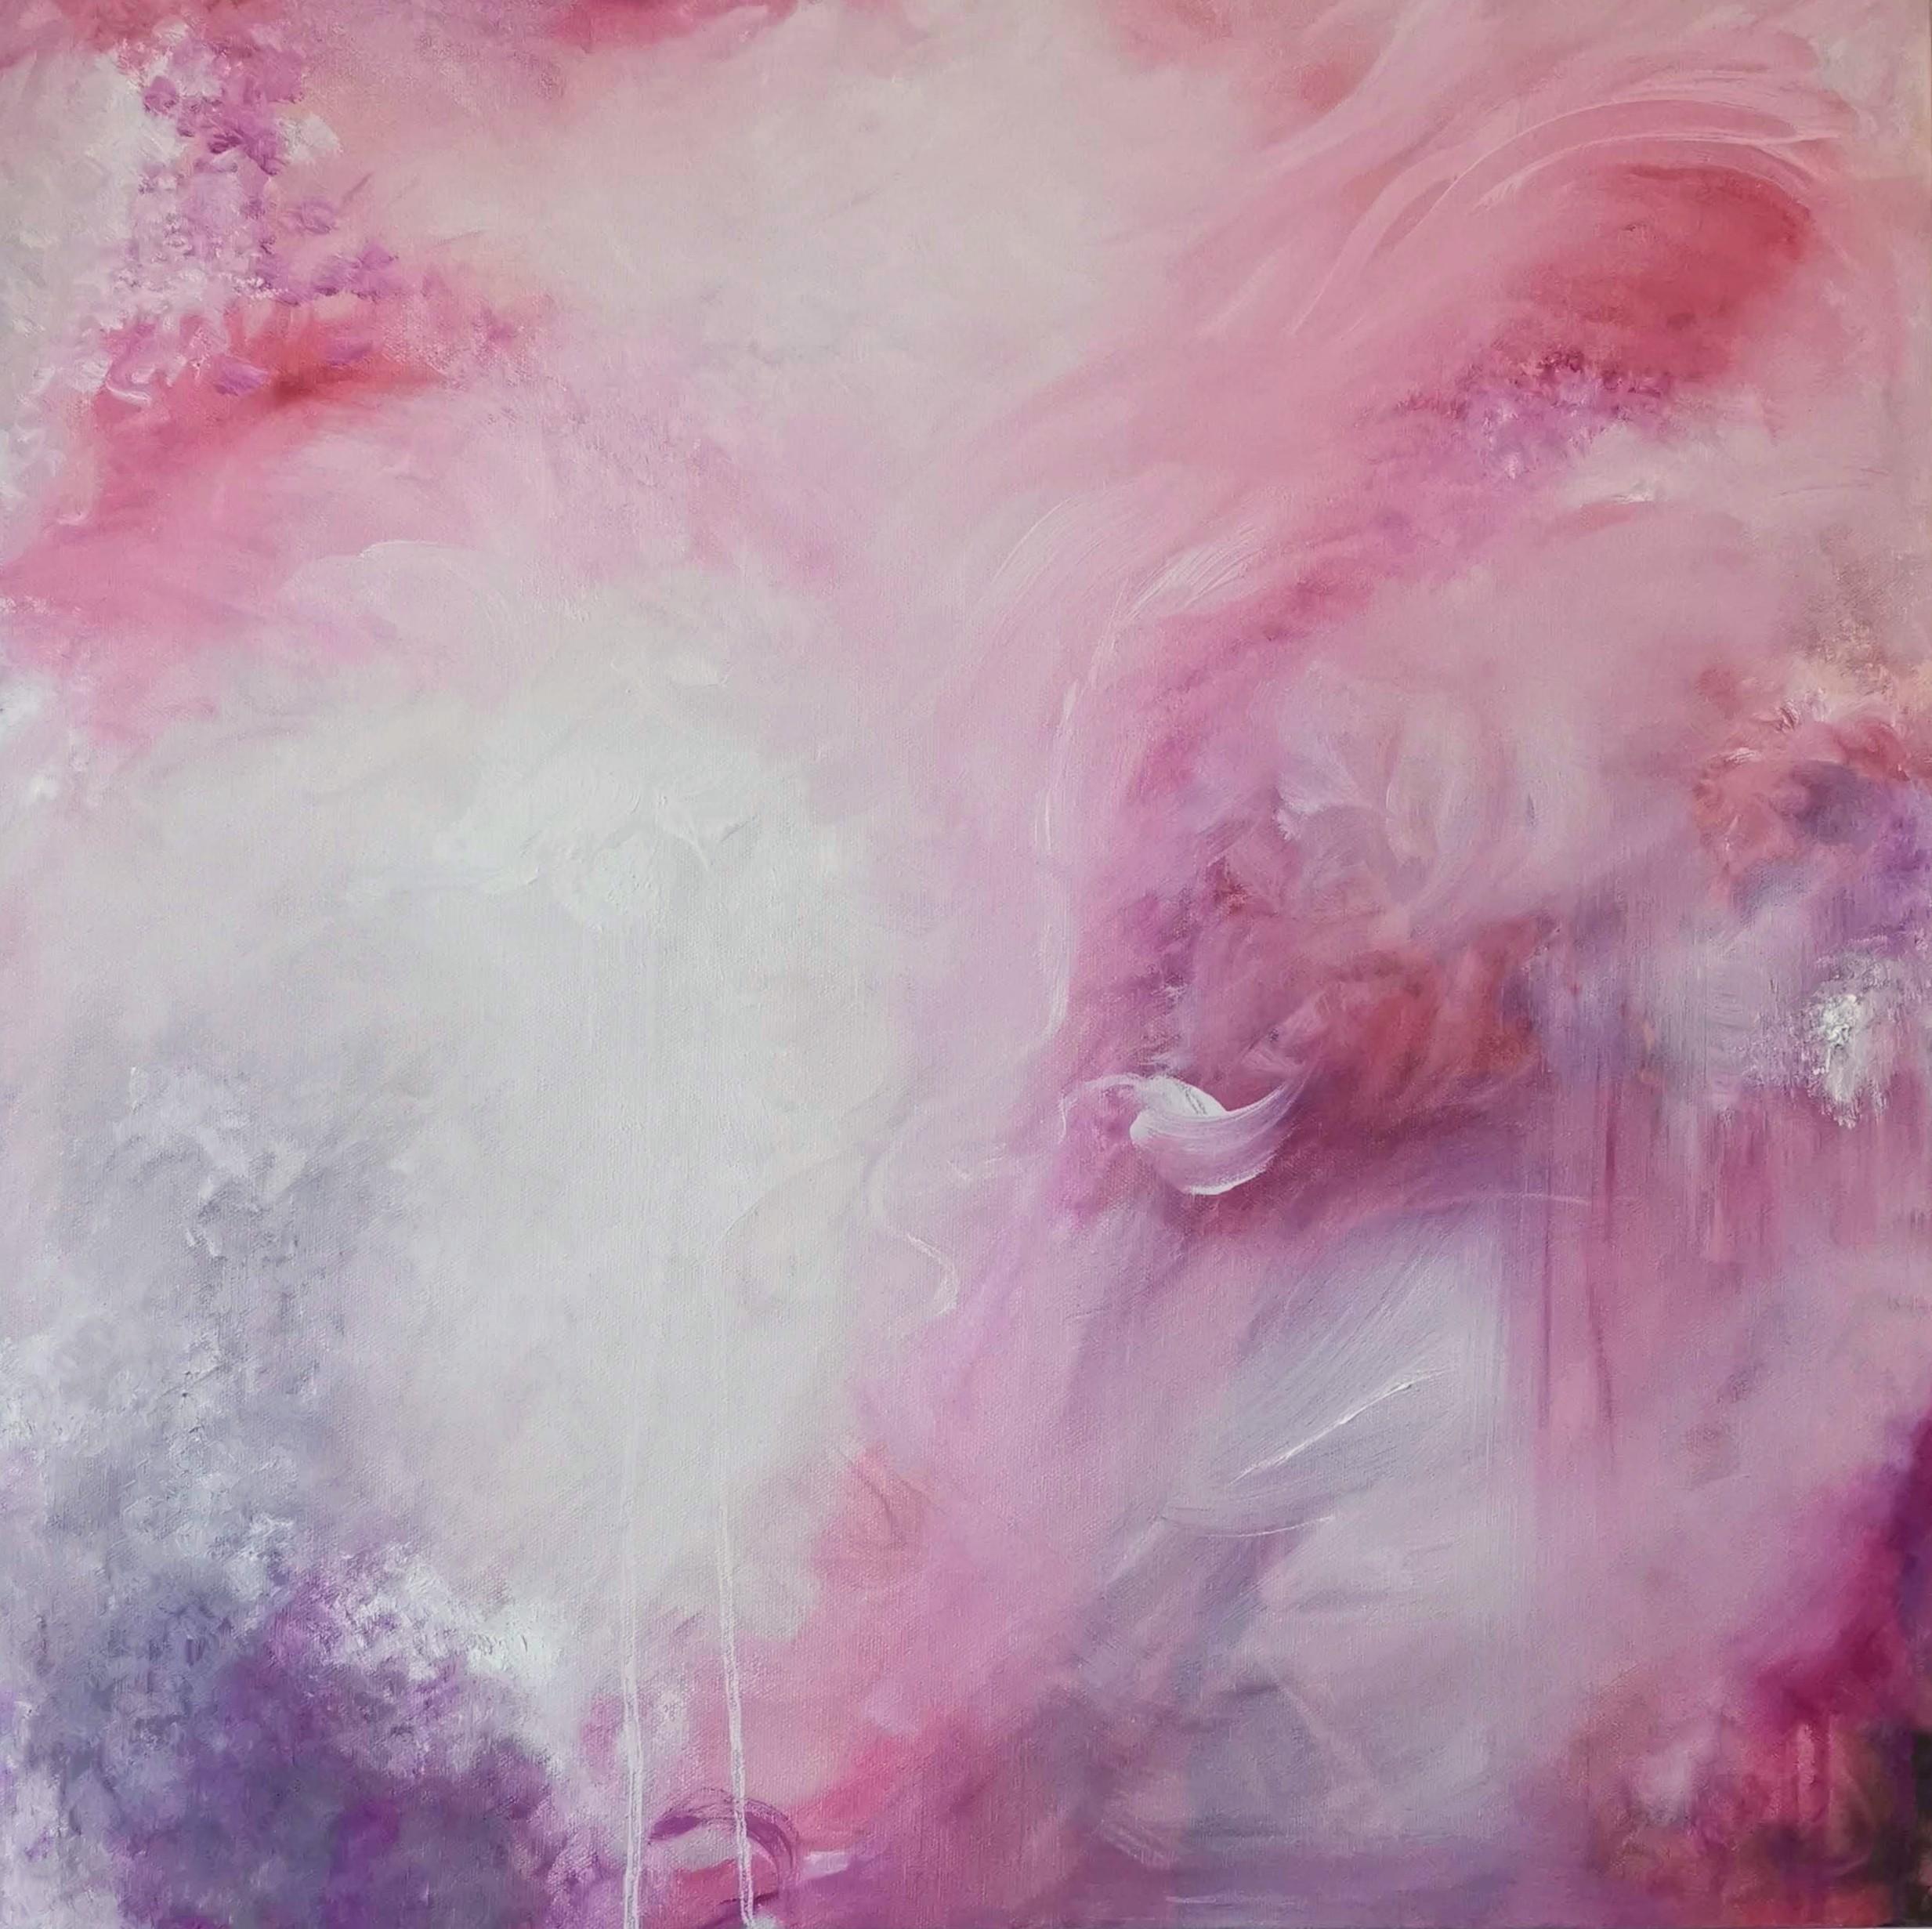 Abstract Painting Jennifer L. Baker - Love child - Peinture de nature abstraite expressionniste rose tendre